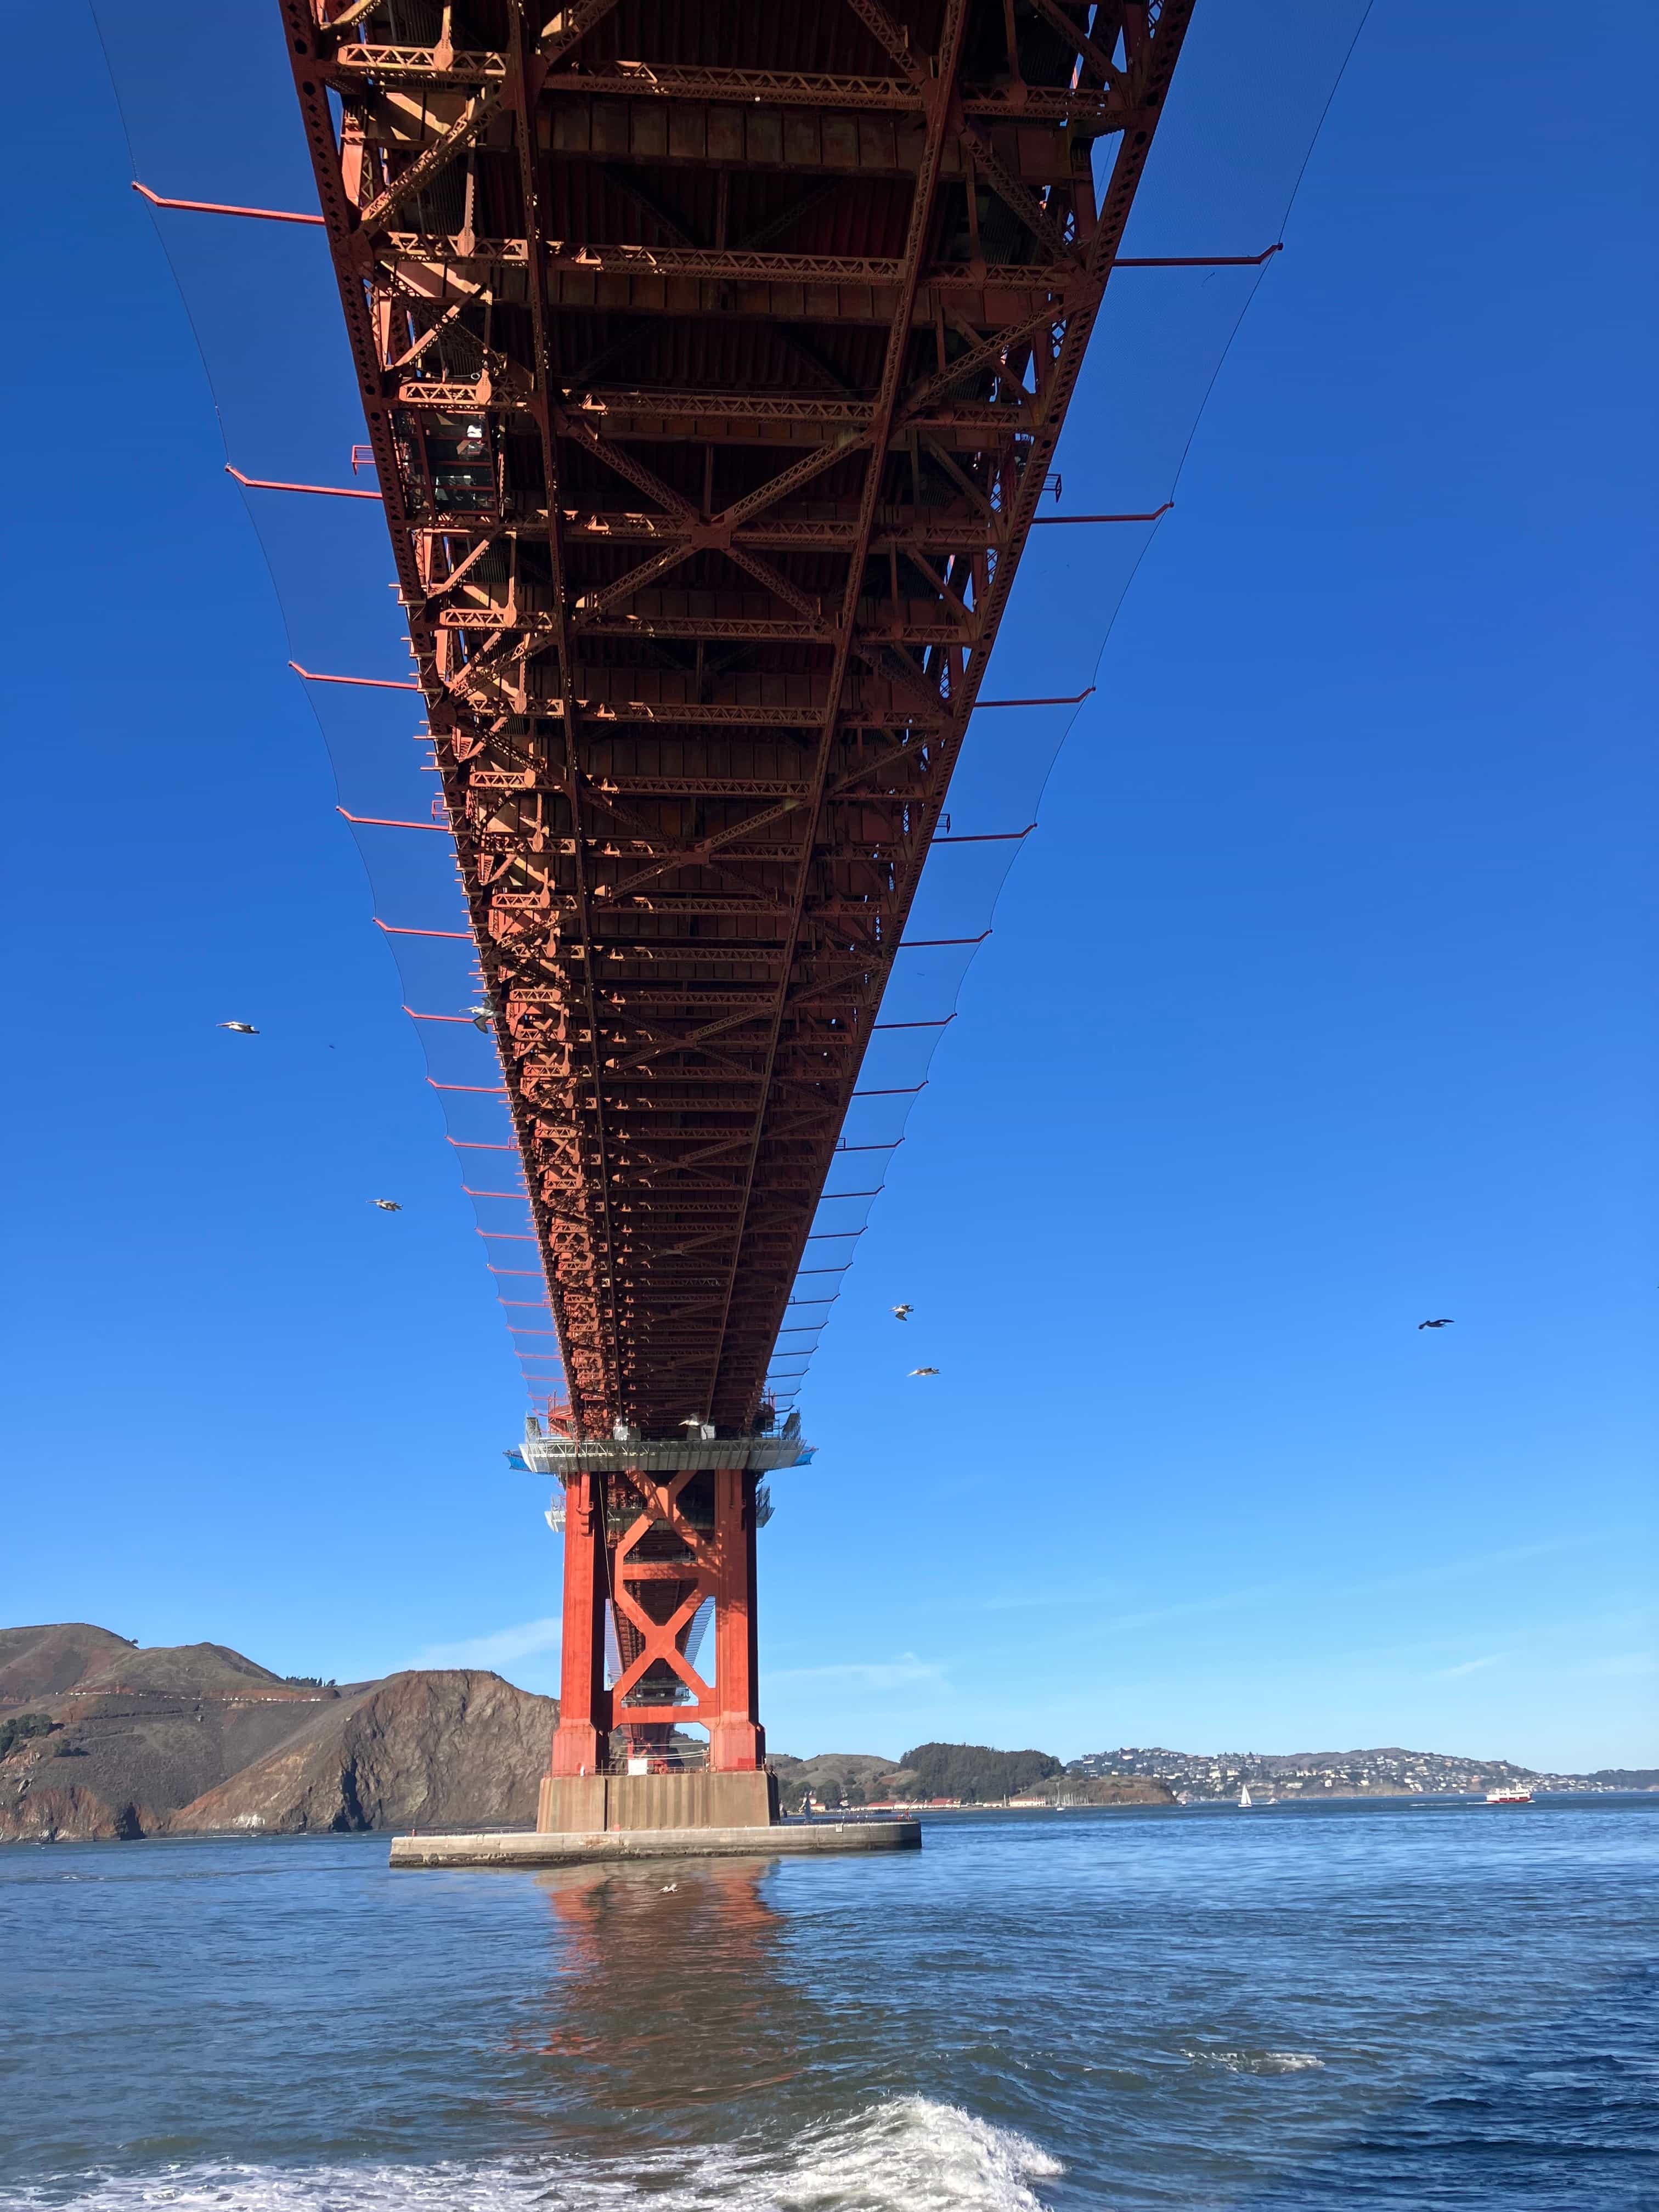 A photograph from under the Golden Gate Bridge